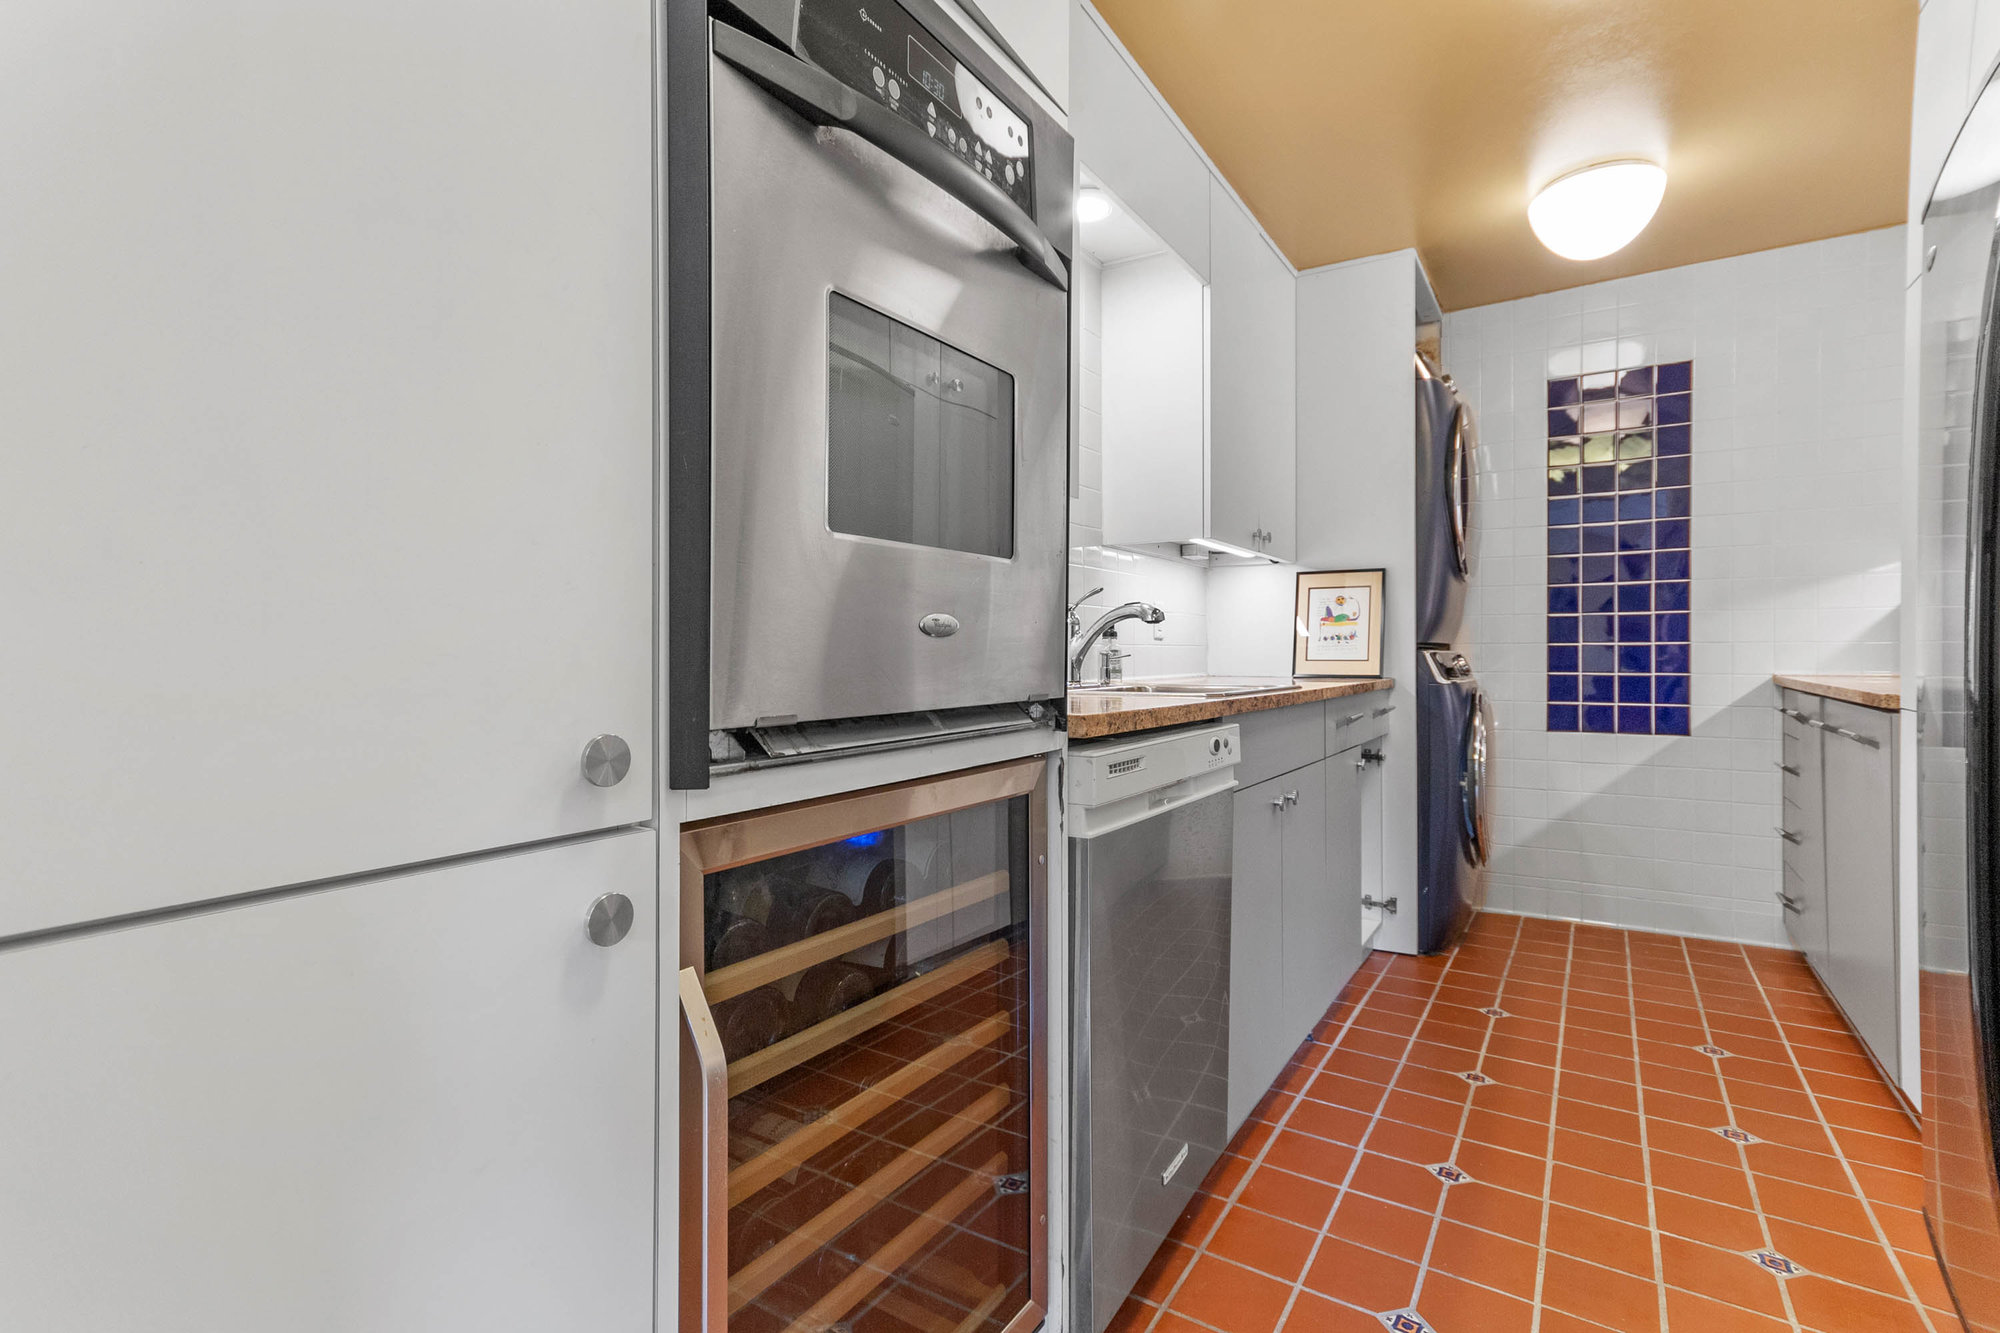 prep kitchen hallway with extra oven and wine fridge